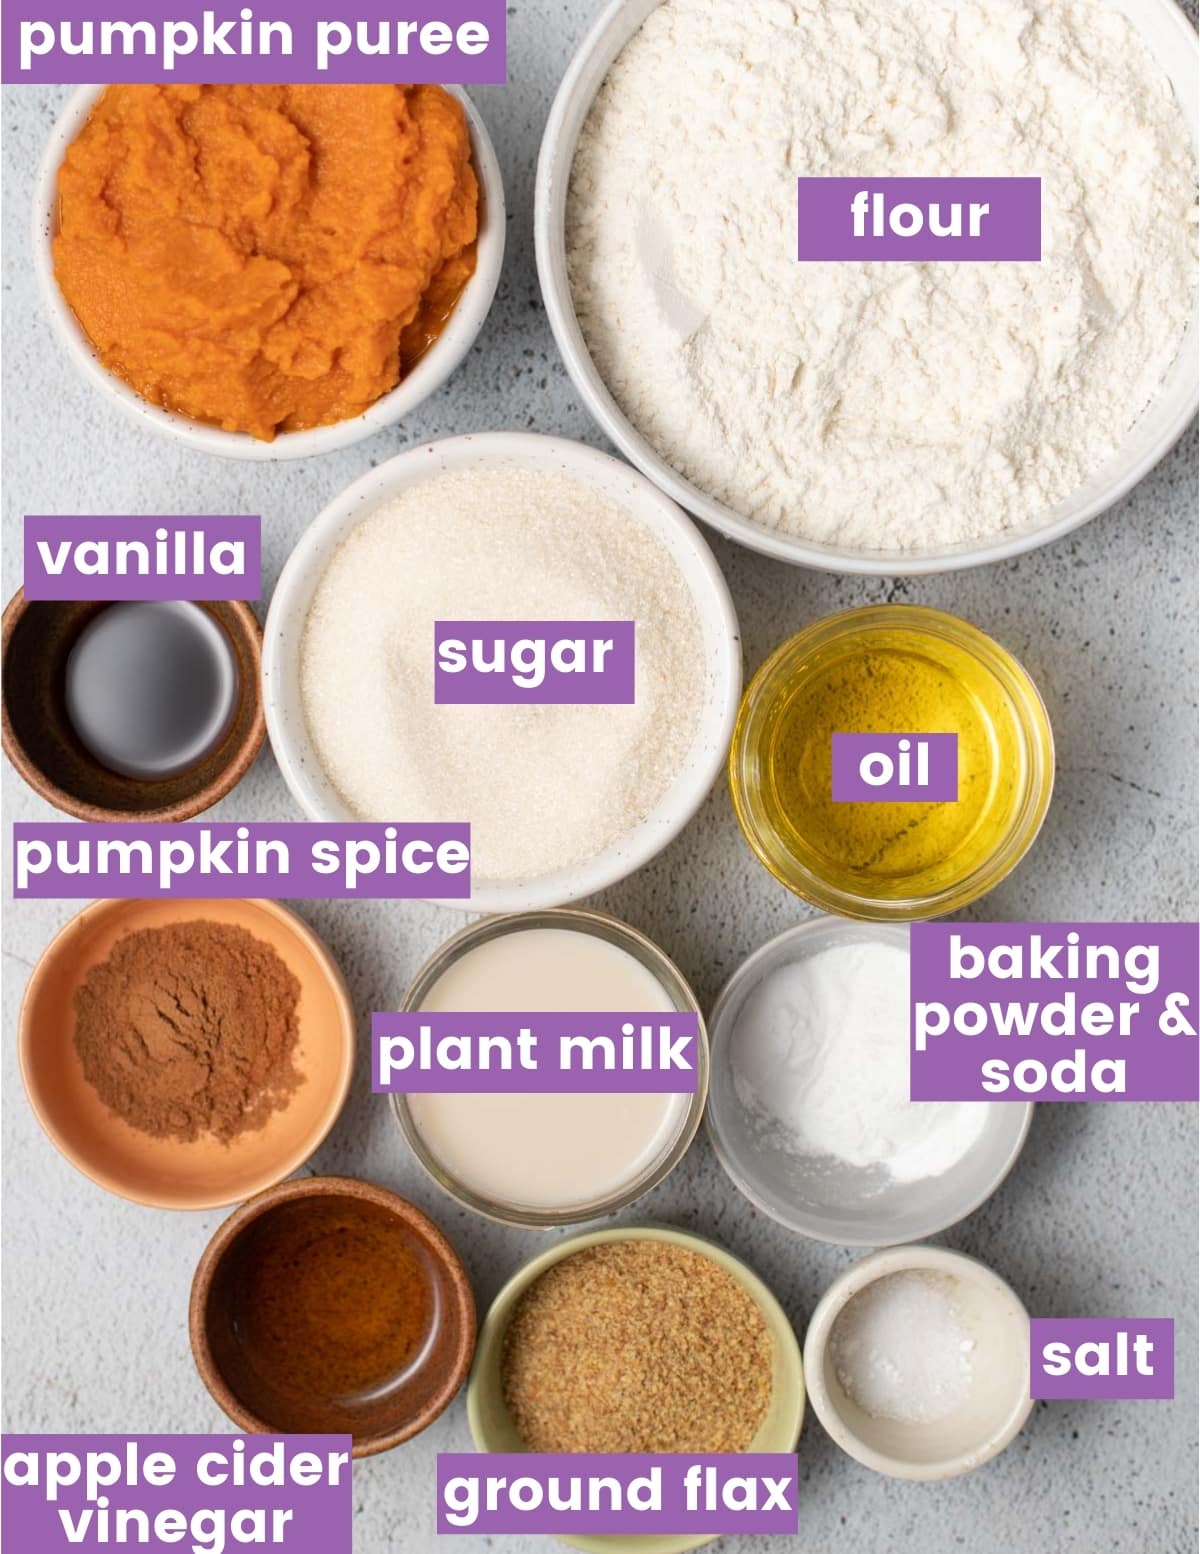 ingredients for making vegan pumpkin muffins as per the written ingredient list